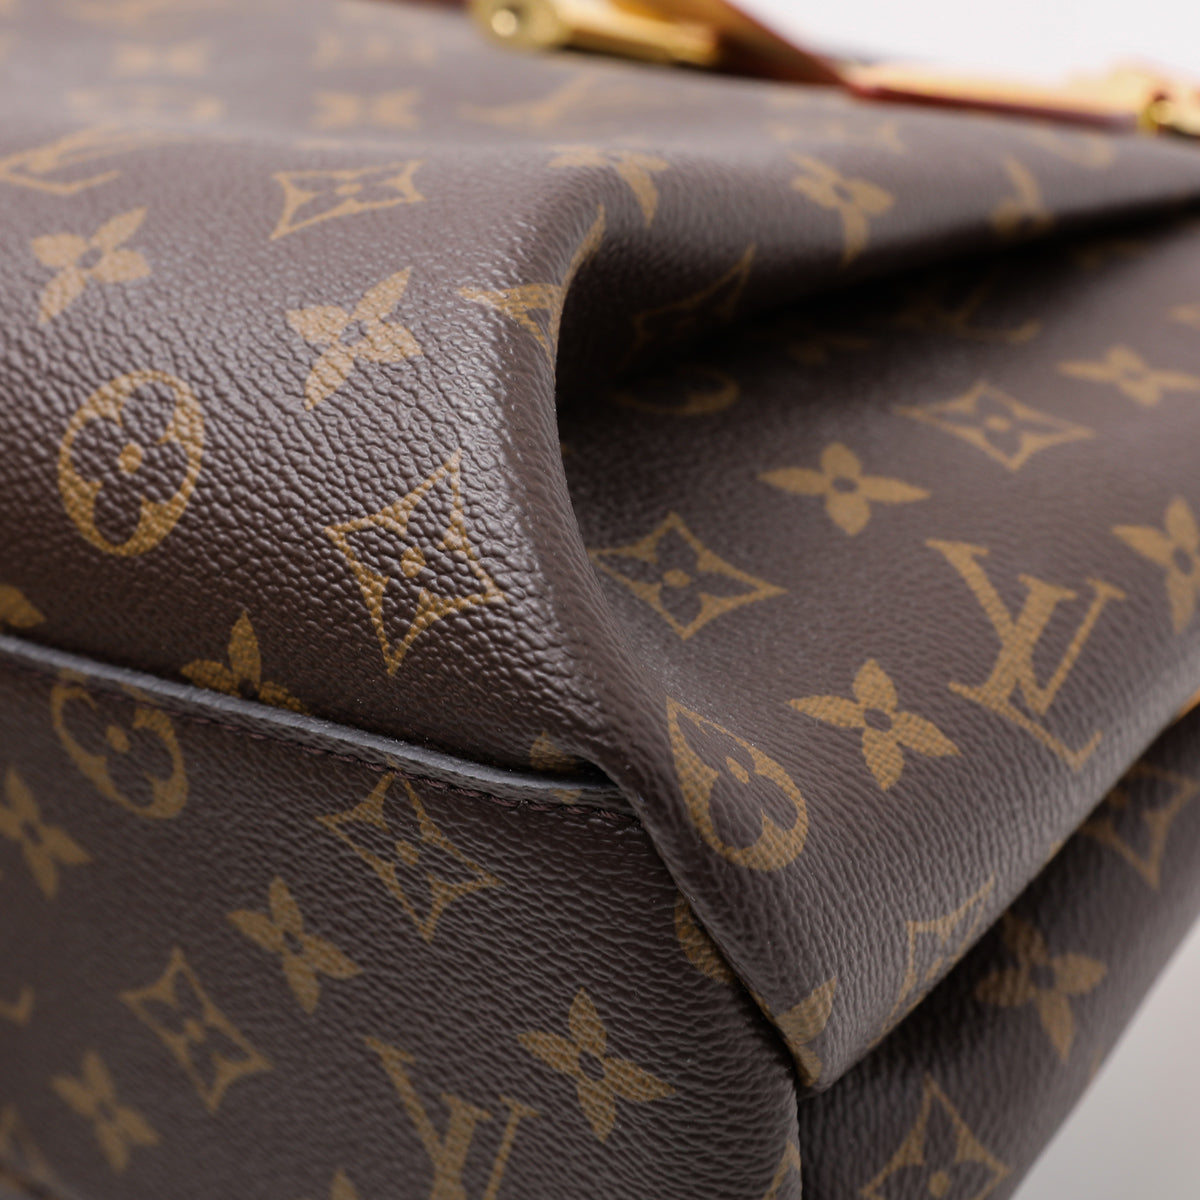 Rivoli cloth handbag Louis Vuitton Beige in Cloth - 26779701